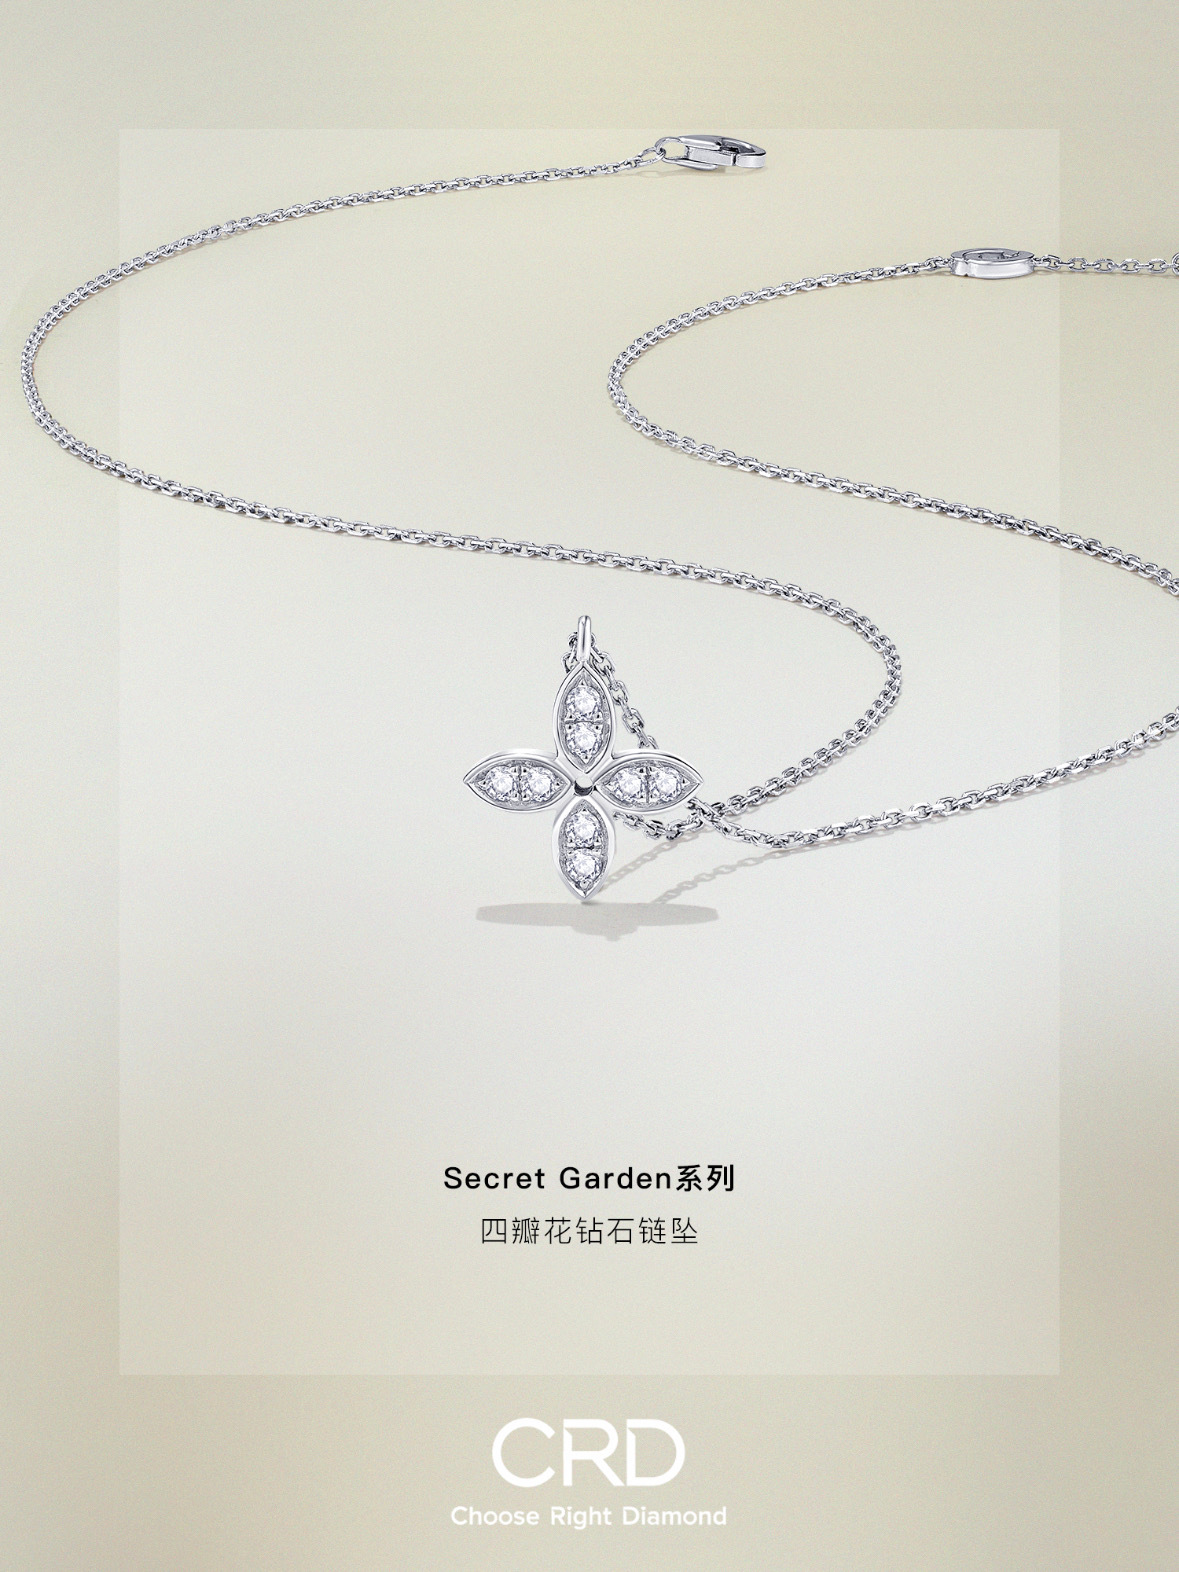 伯遠演繹CRD Secret Garden系列珠寶